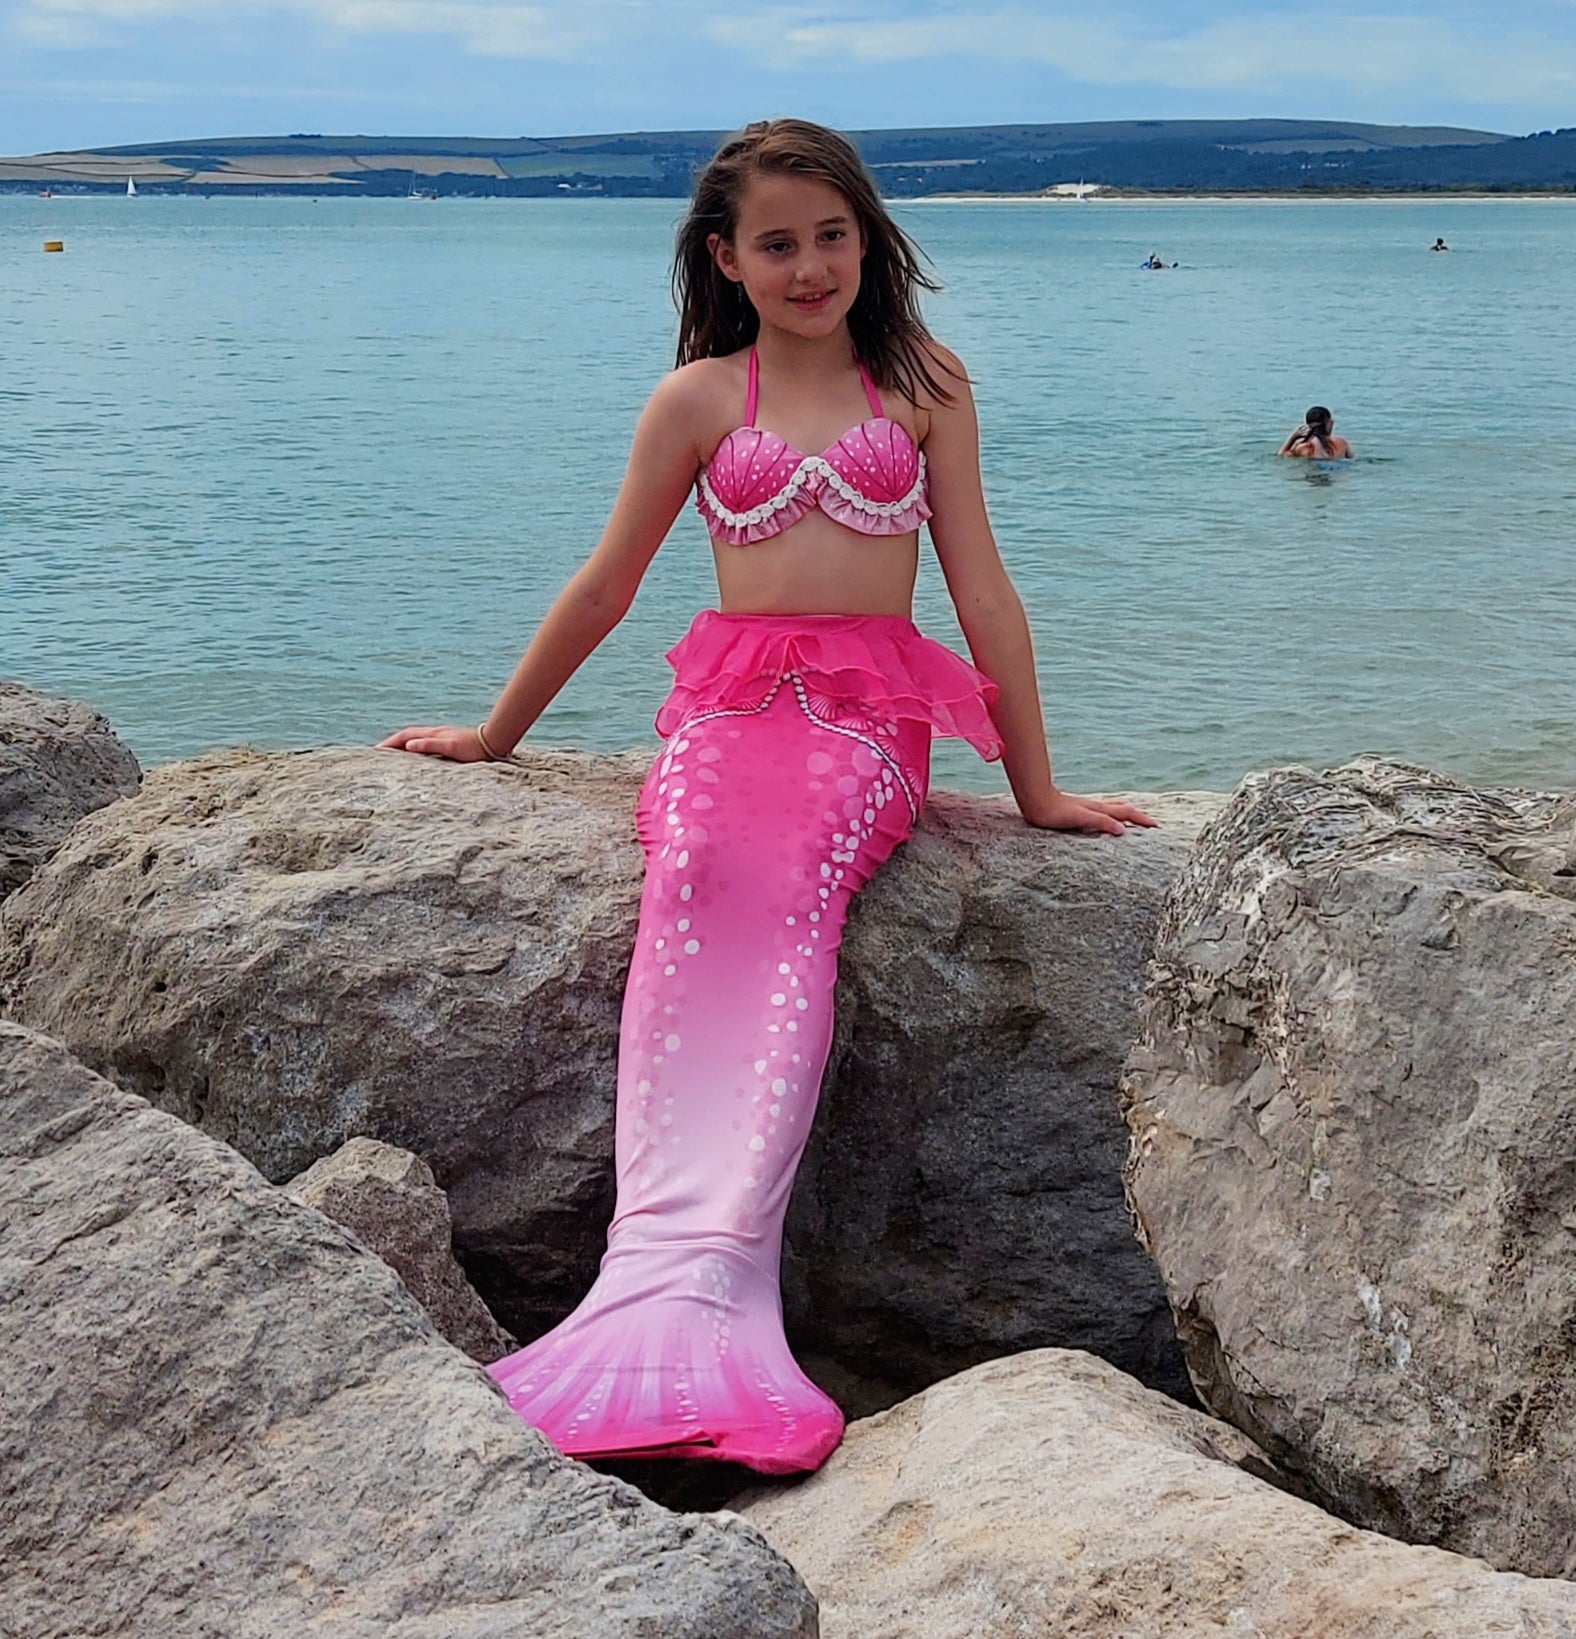 Mermaid Tail & Pink Shell Bikini 2yrs +